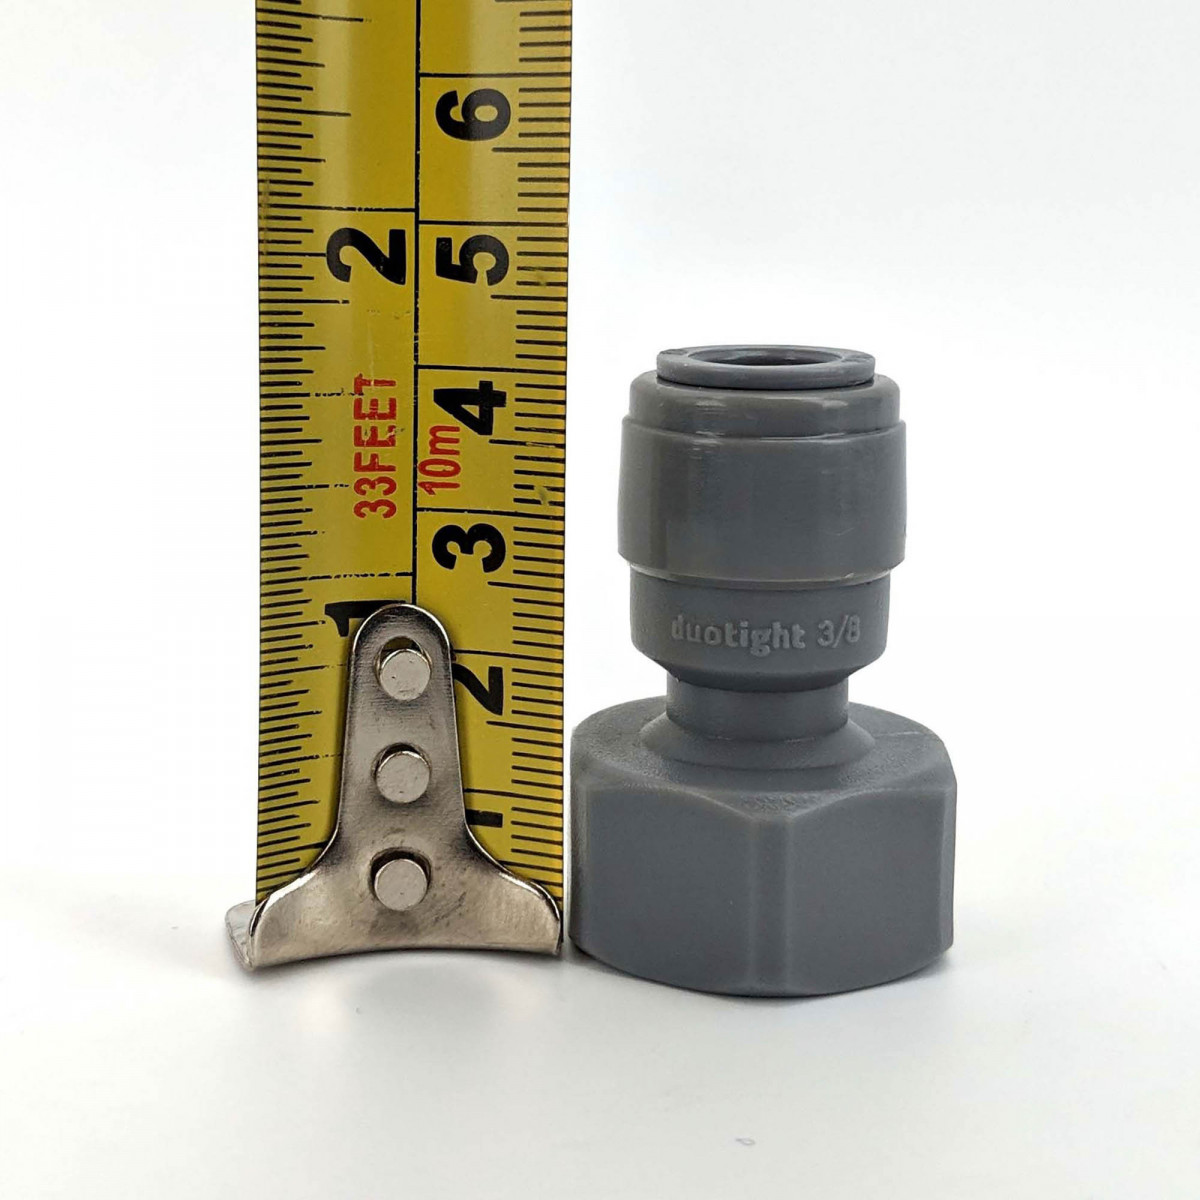 Duotight verbindingsstuk 9,5 mm (3/8”) push-in koppeling naar 5/8” binnendraad